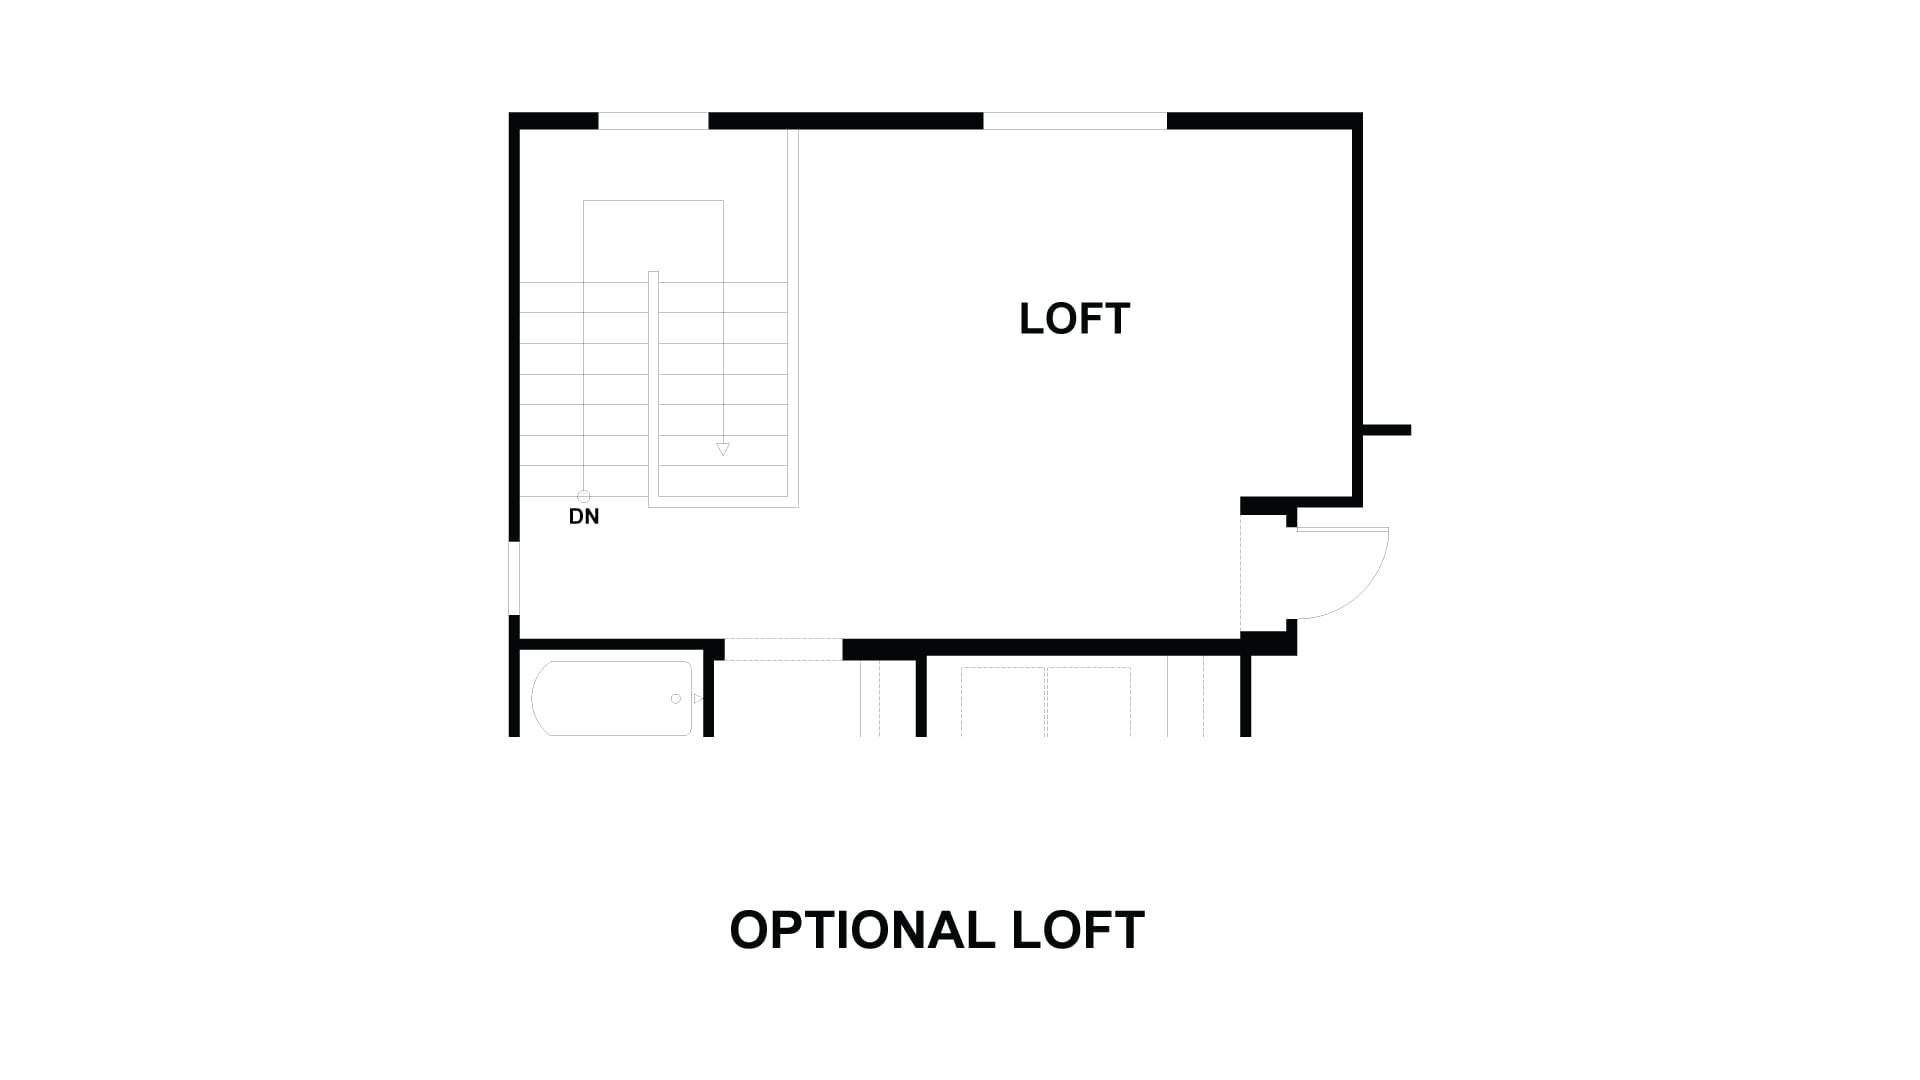 Optional Loft. 3br New Home in Costa Mesa, CA